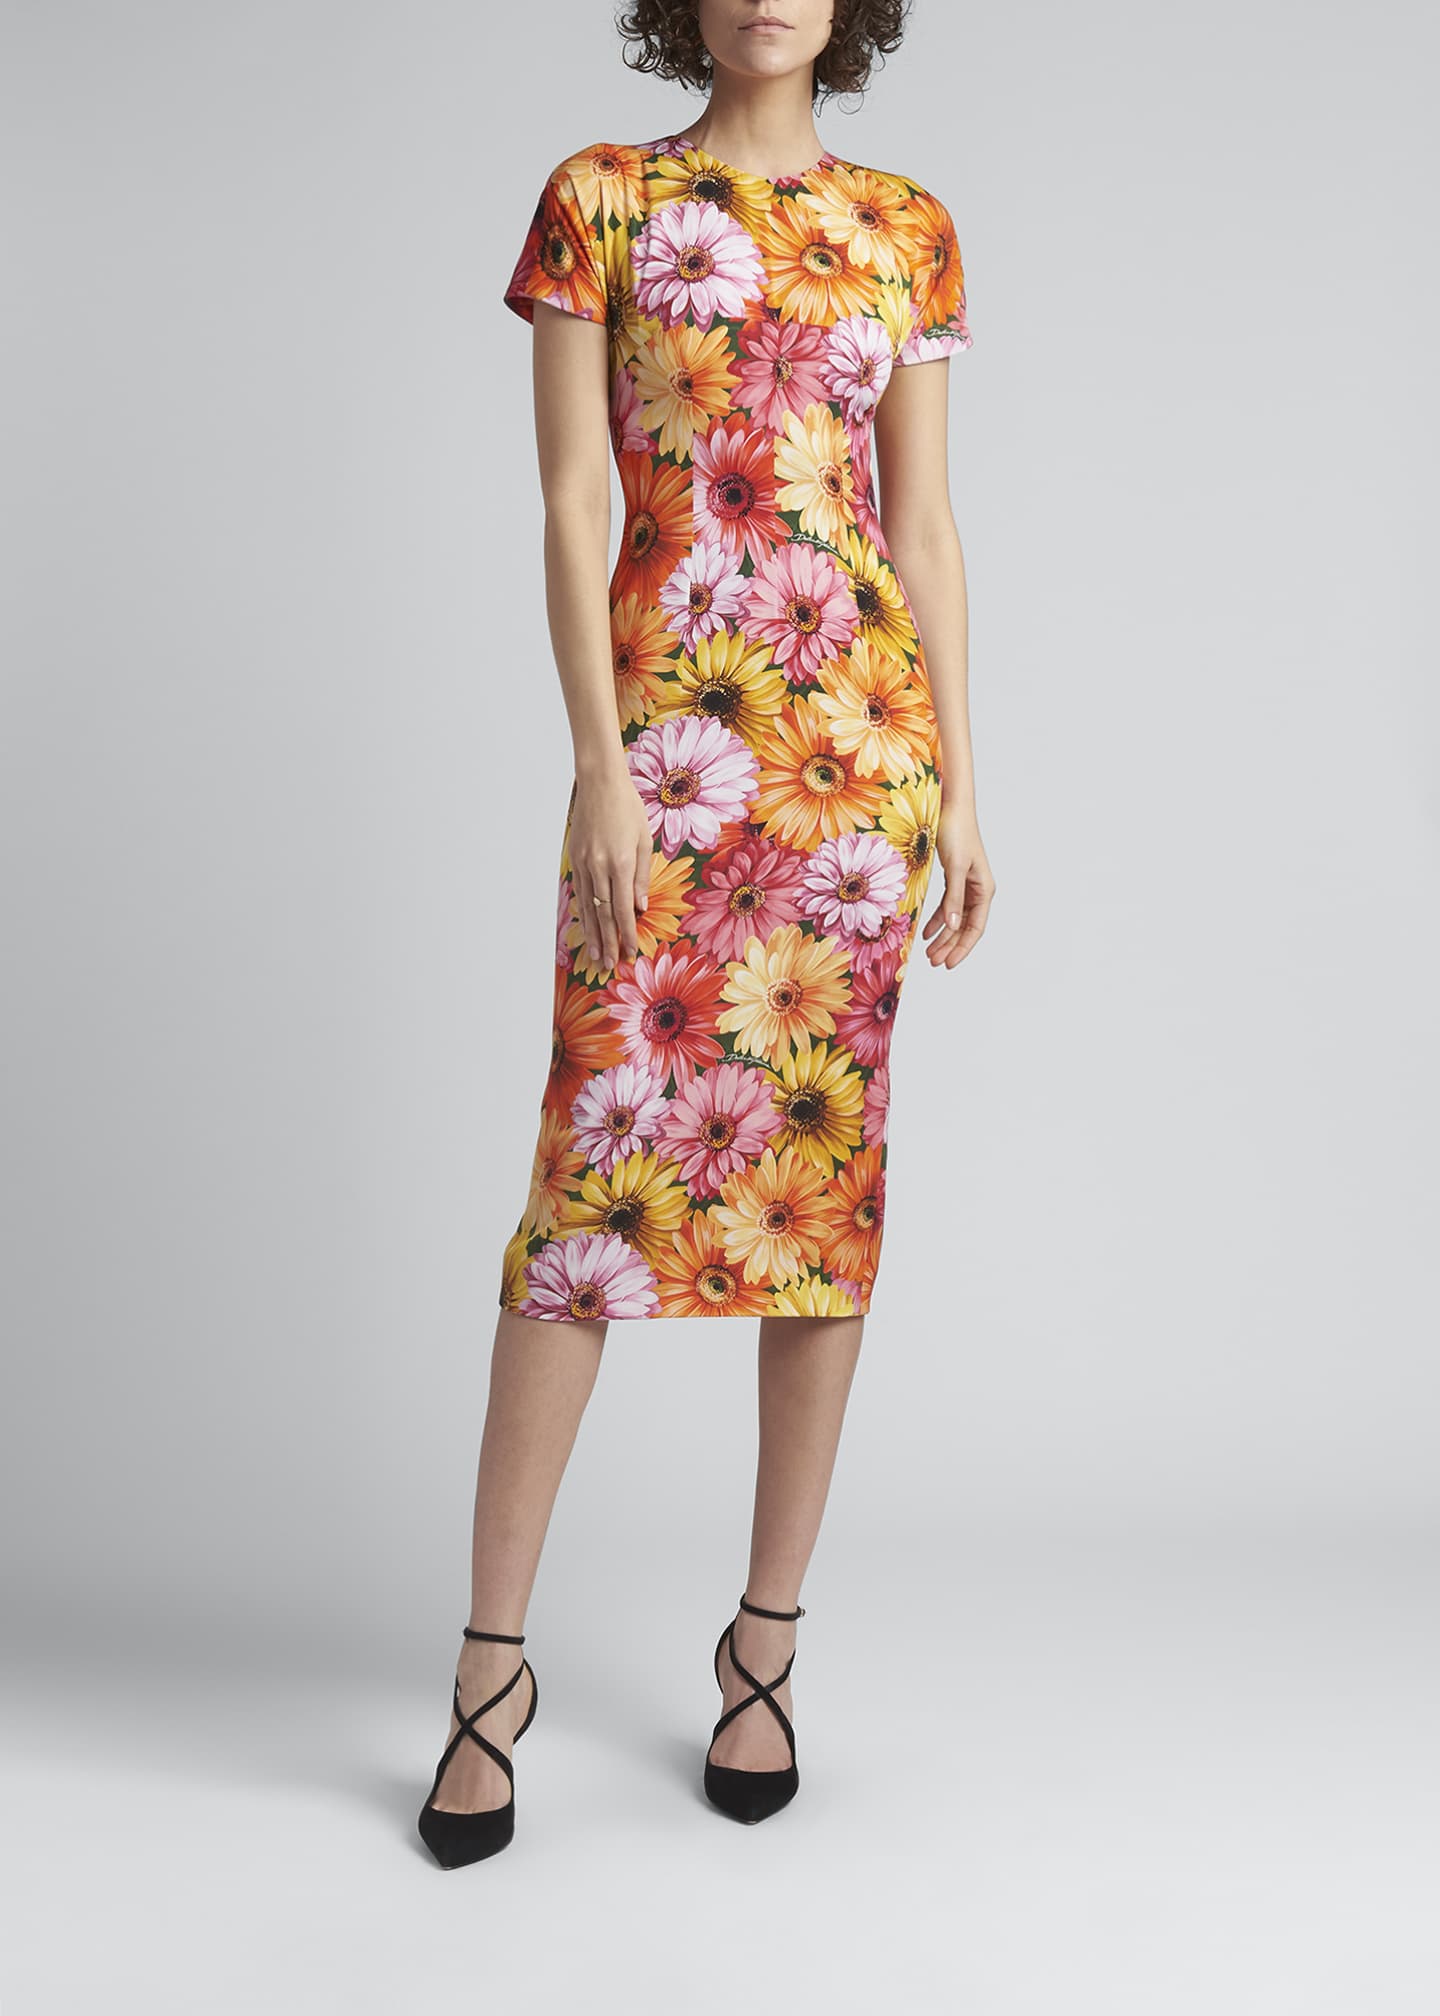 Dolce&Gabbana Tubino Floral-Printed Midi Dress - Bergdorf Goodman